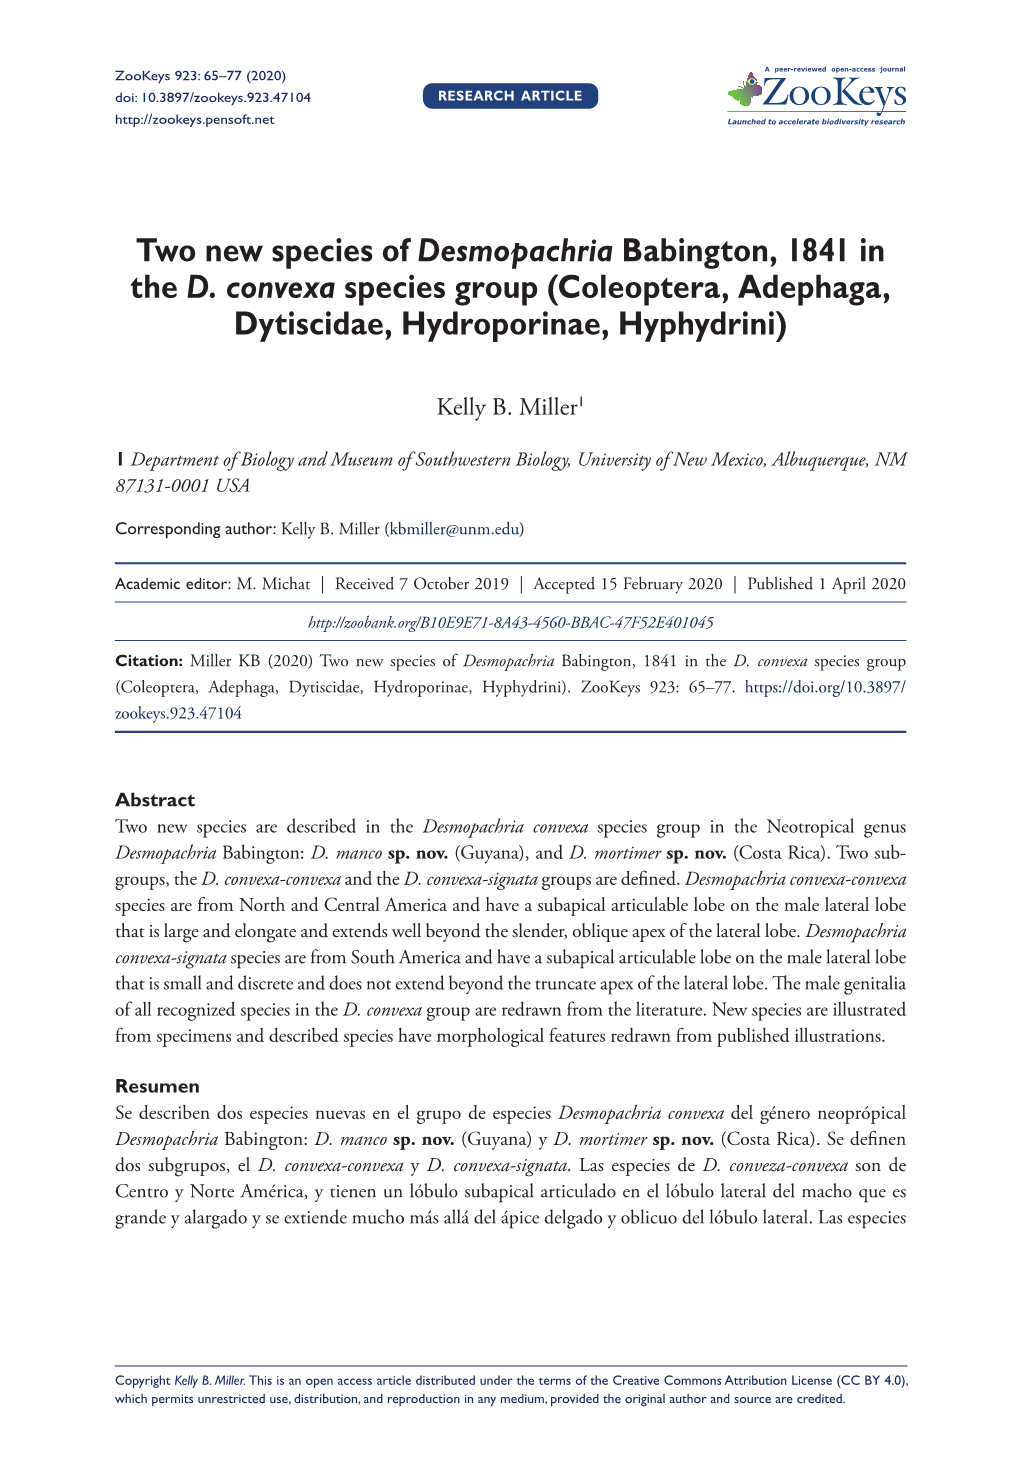 Coleoptera, Adephaga, Dytiscidae, Hydroporinae, Hyphydrini)